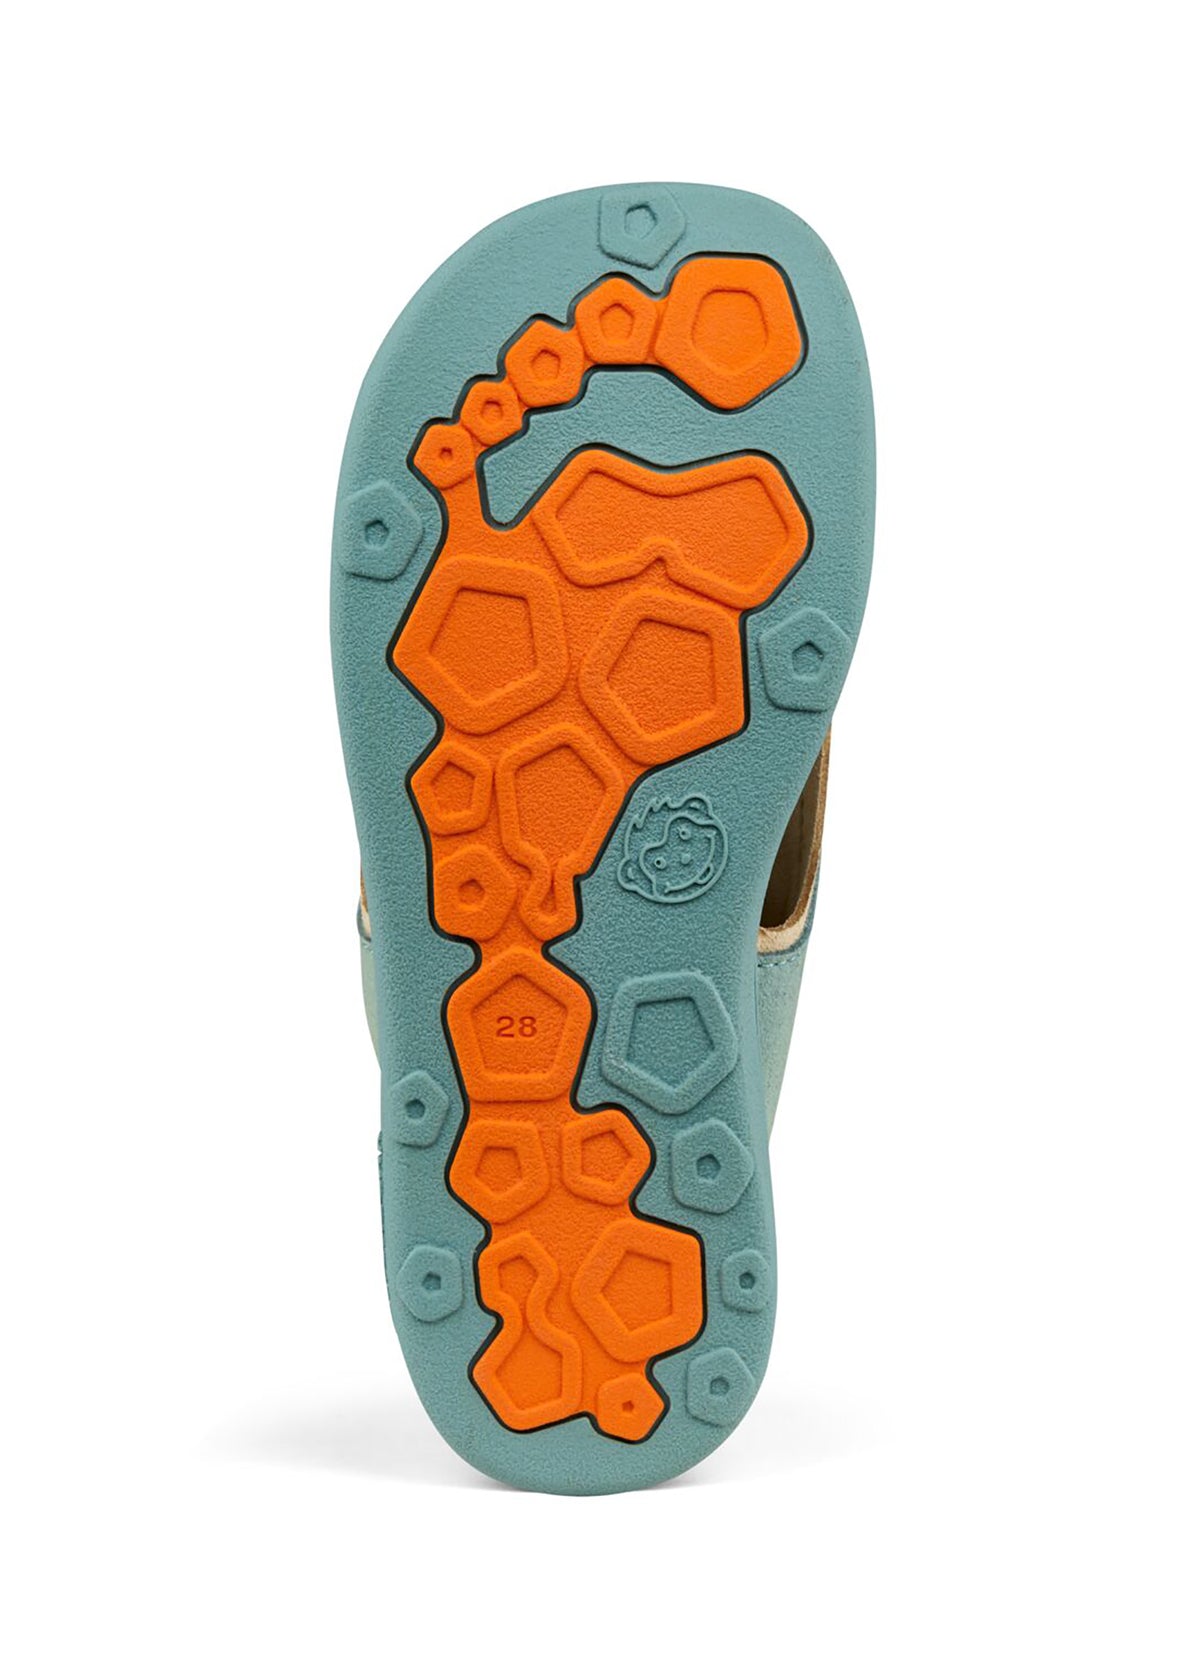 Barnsandaler med kanin barfota - sandal mikrofiber luftig, mintgrön, orange klistermärken, vegan